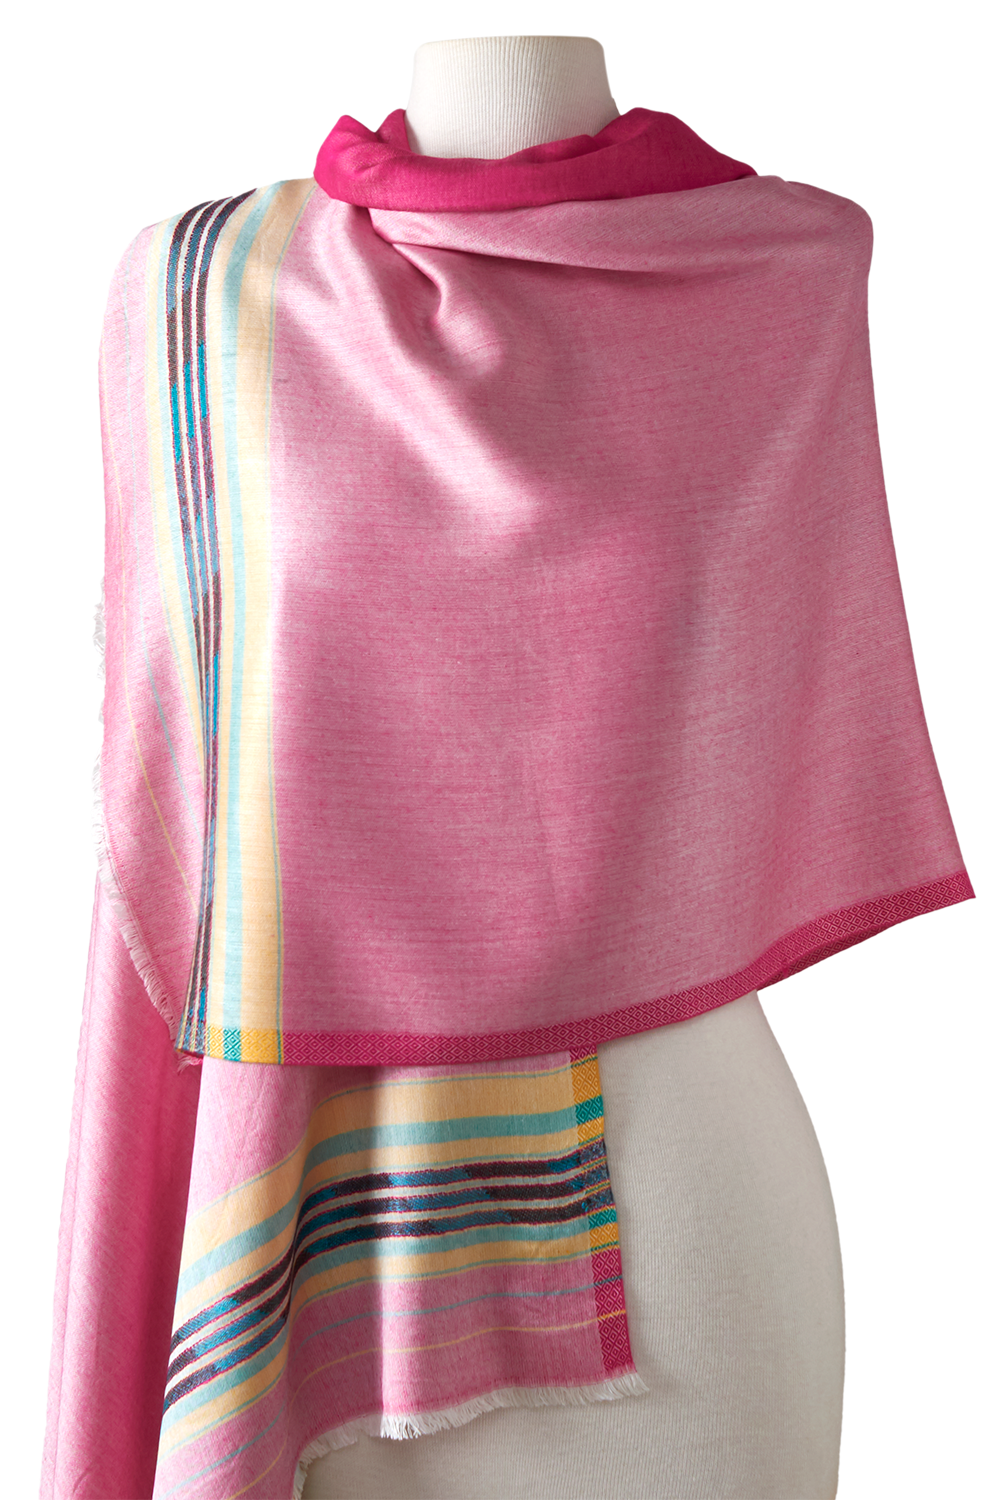 Pashmina Dupla Face modal com seda indiana rosa | 70x190cm